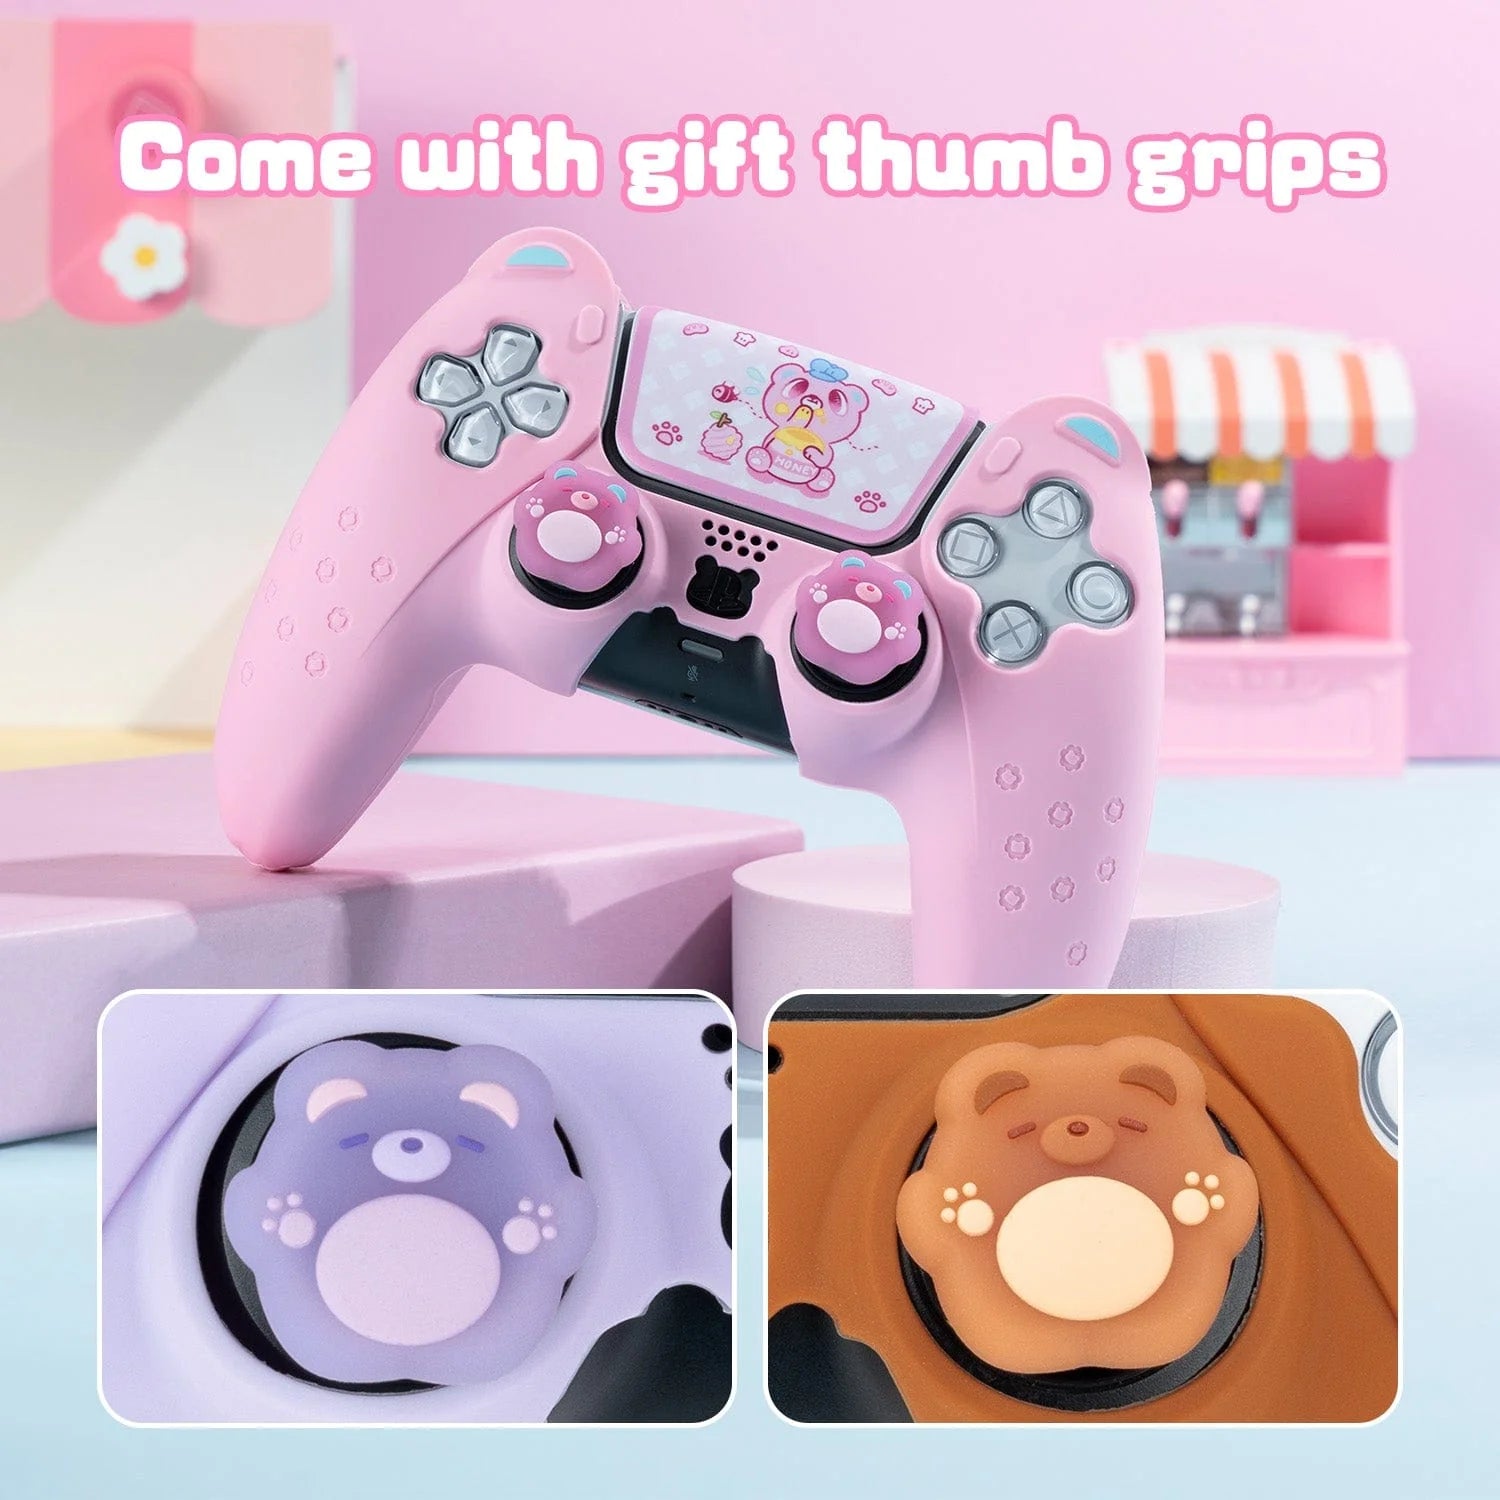 GeekShare "Sugar Bear" PS5 Controller Skin (Pink)